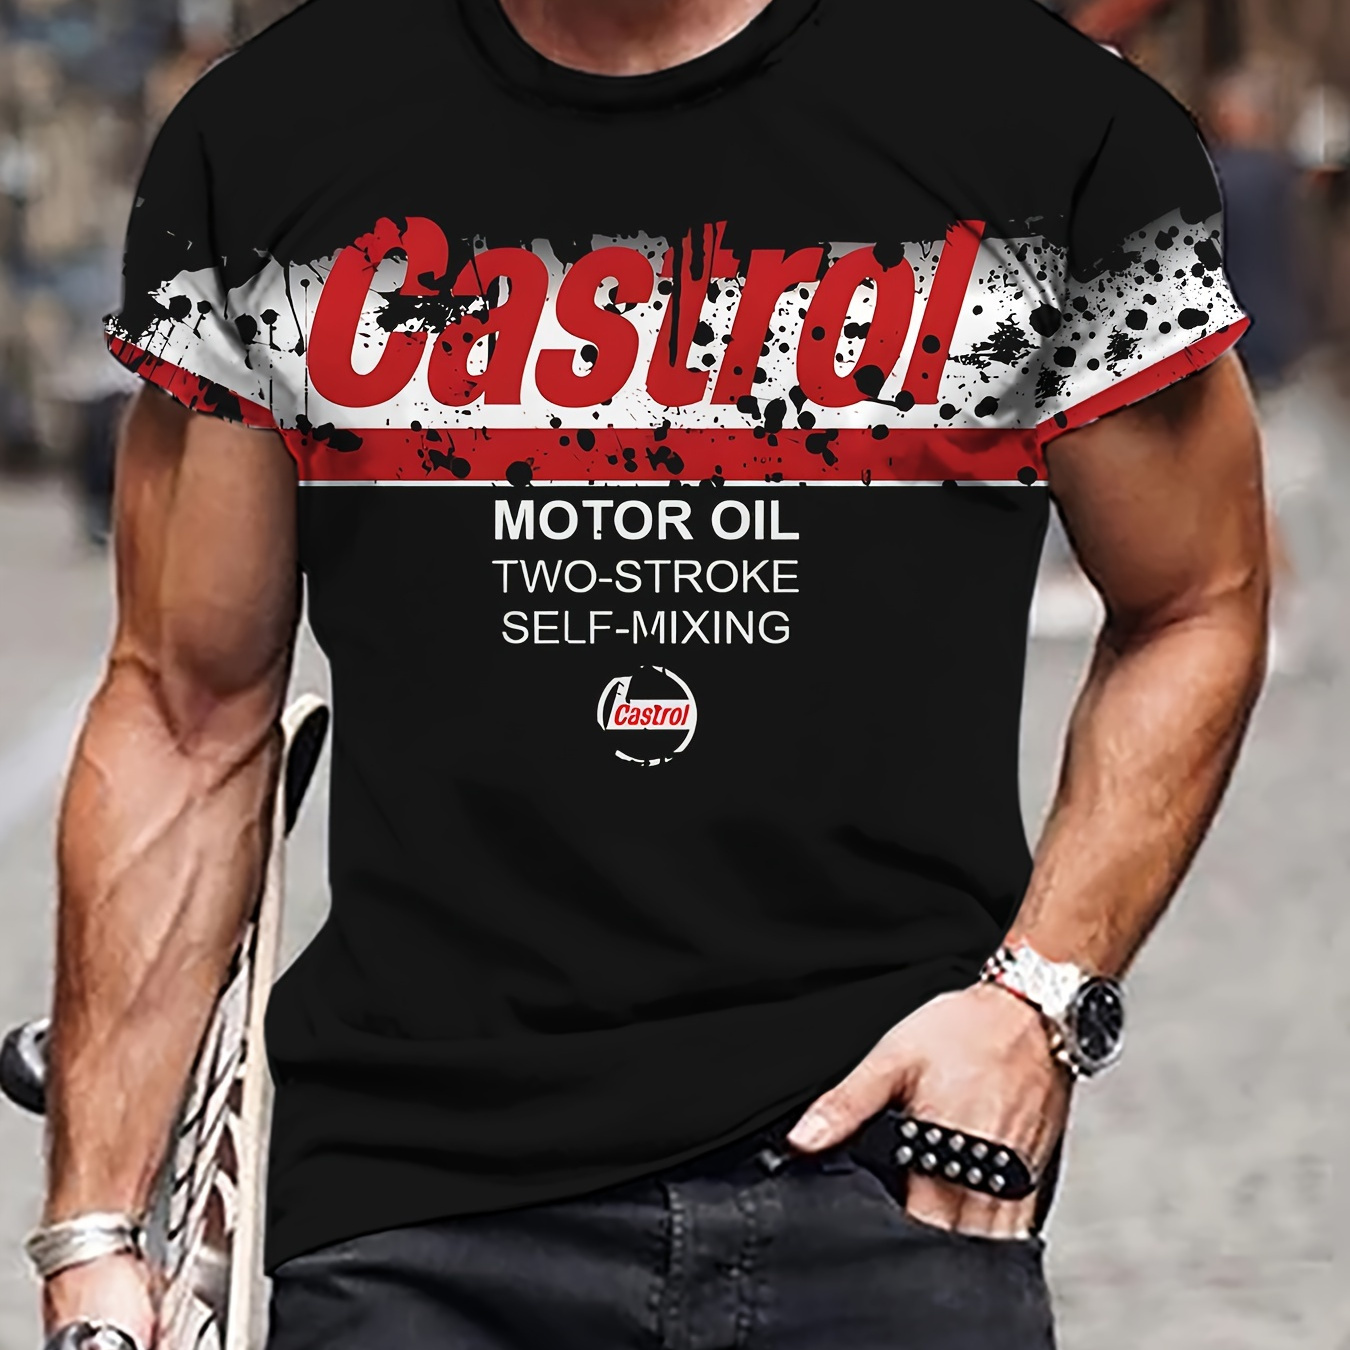 

Men's Castrol Print T-shirt, Casual Short Sleeve Crew Neck Tee, Men's Clothing For Outdoor